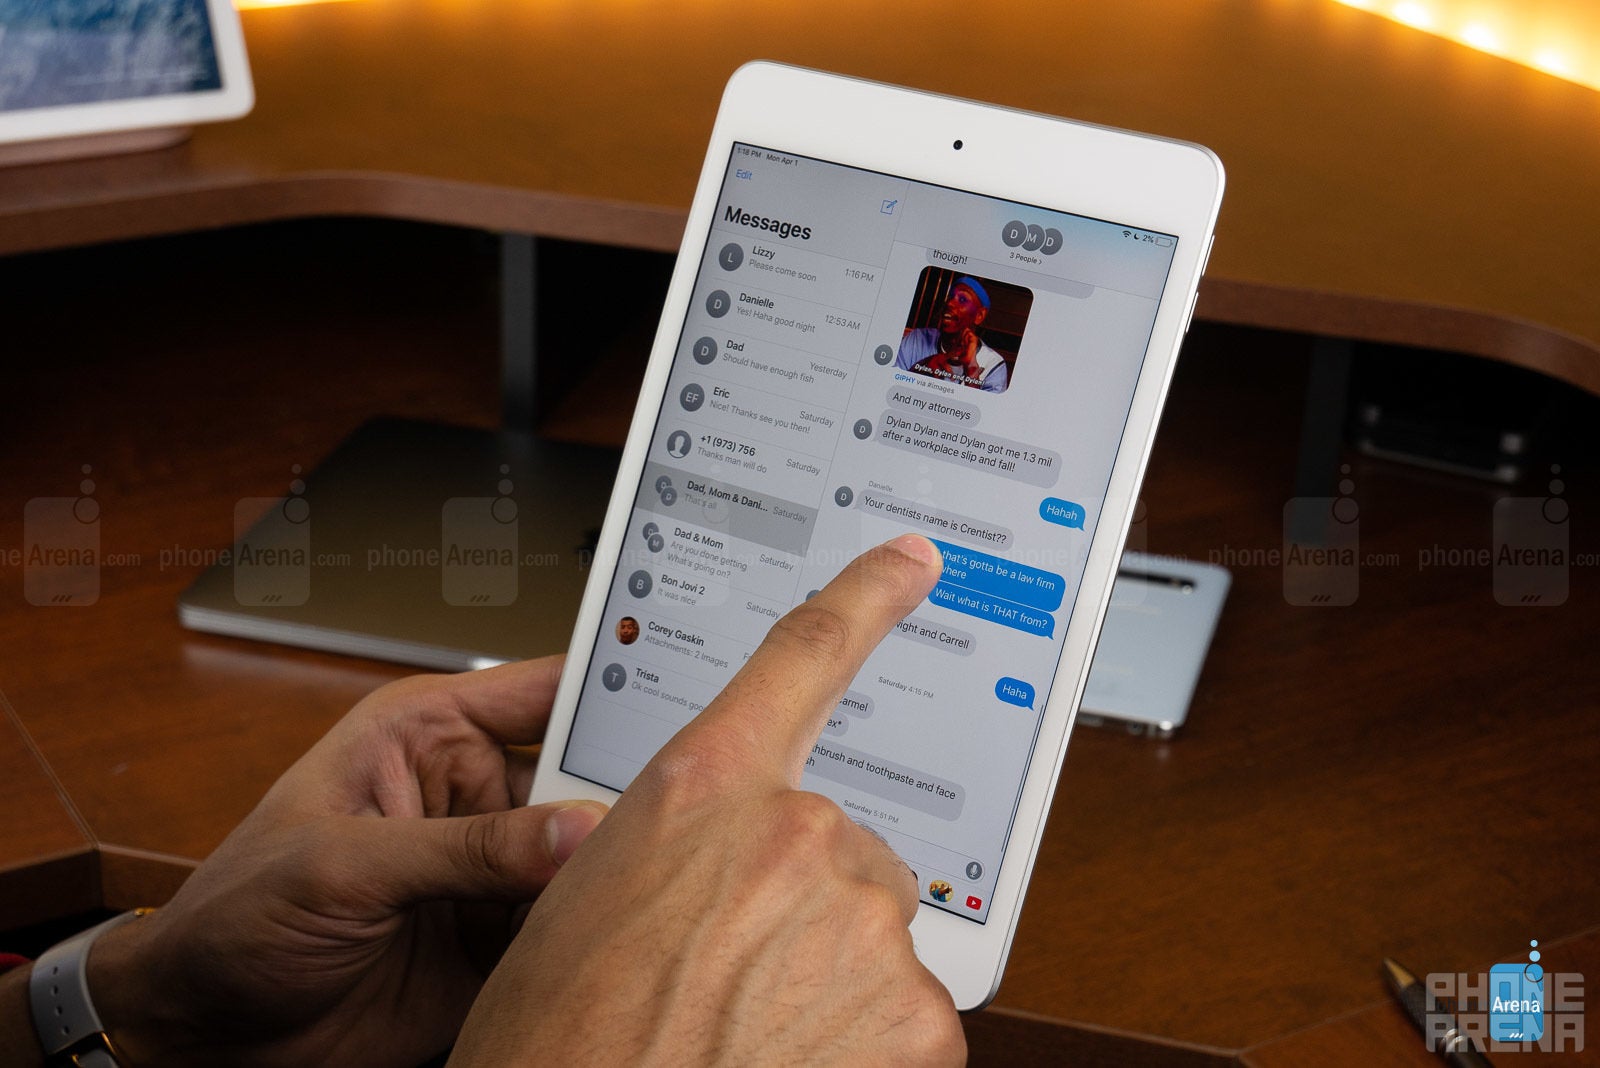 Apple iPad Mini (2019) review